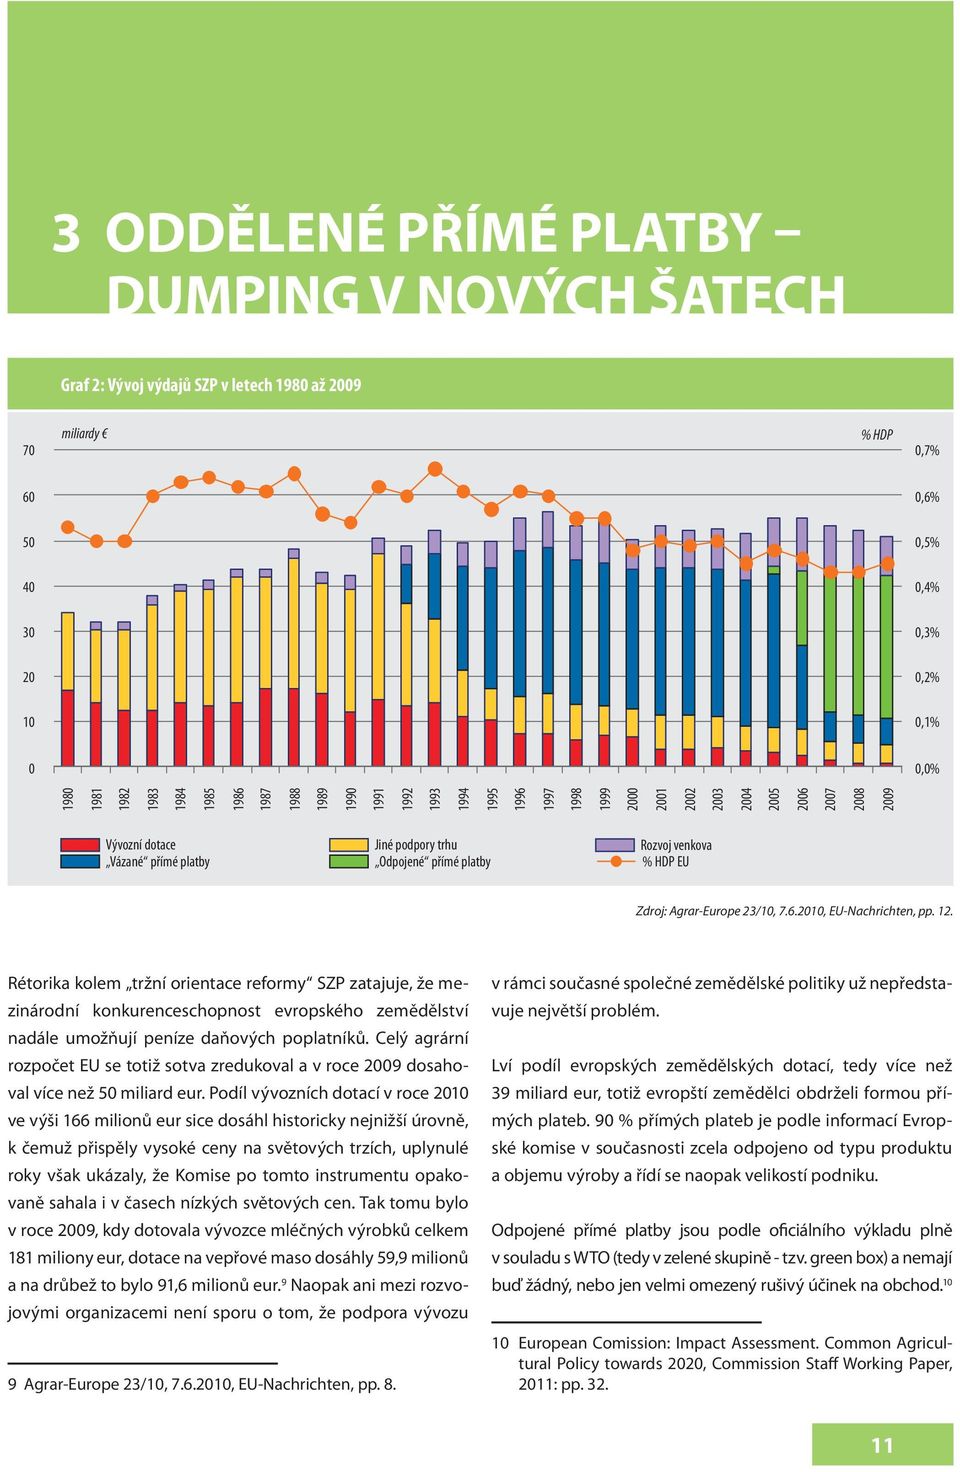 Rozvoj venkova % HDP EU Zdroj: Agrar-Europe 23/10, 7.6.2010, EU-Nachrichten, pp. 12.